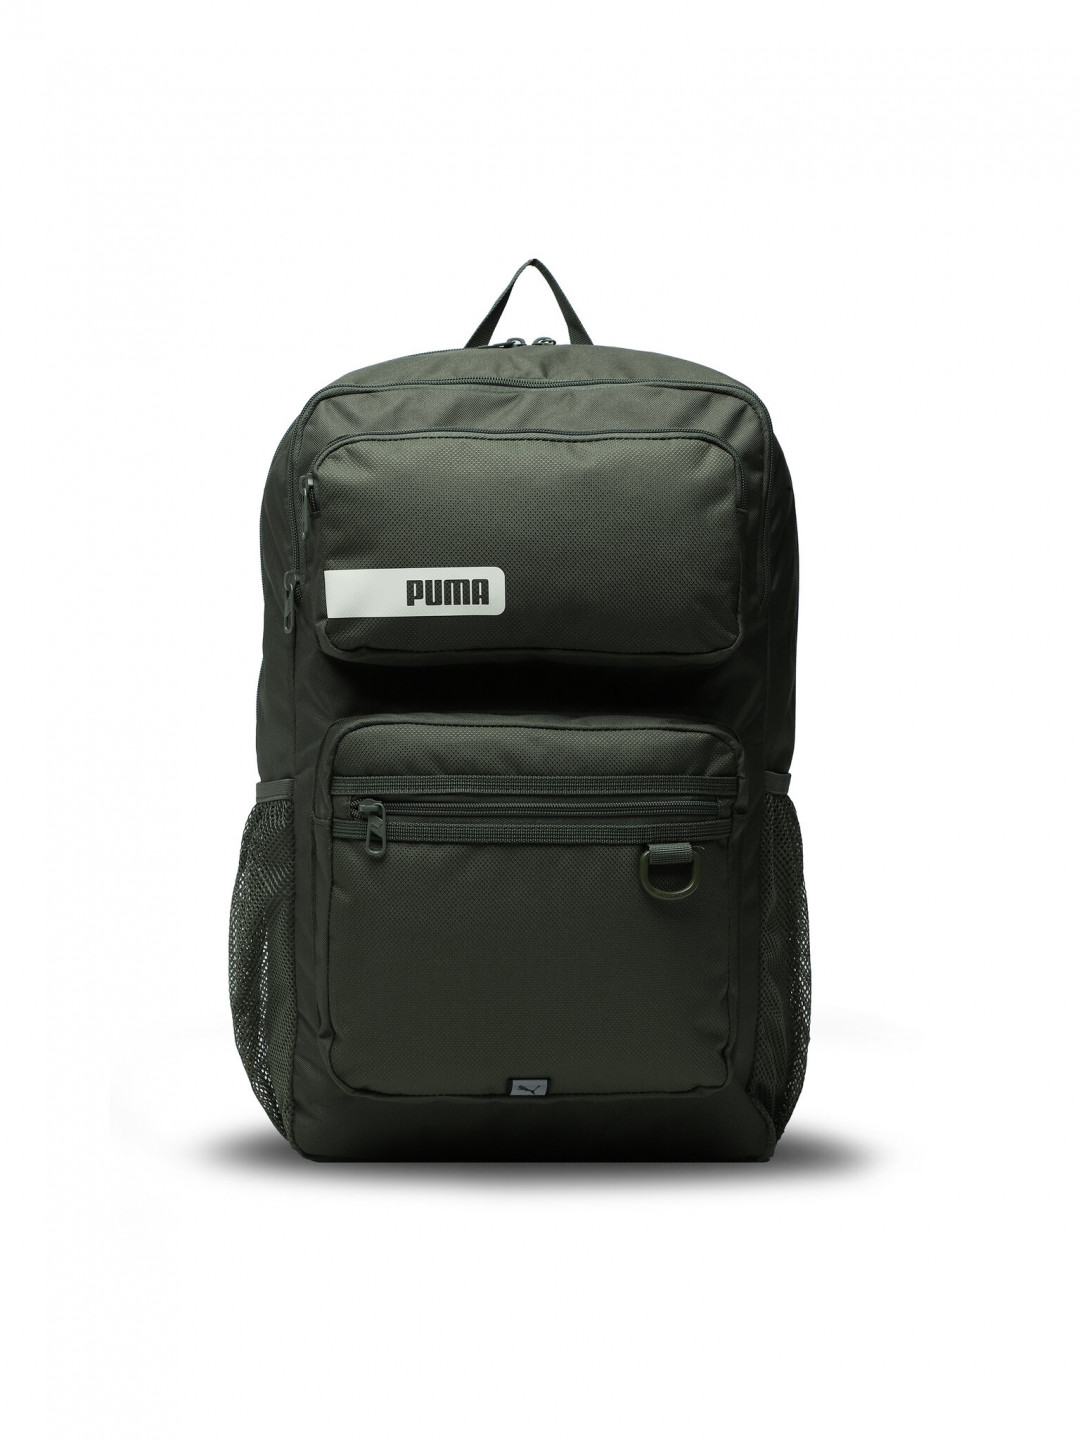 Puma Batoh Deck Backpack II 079512 02 Zelená